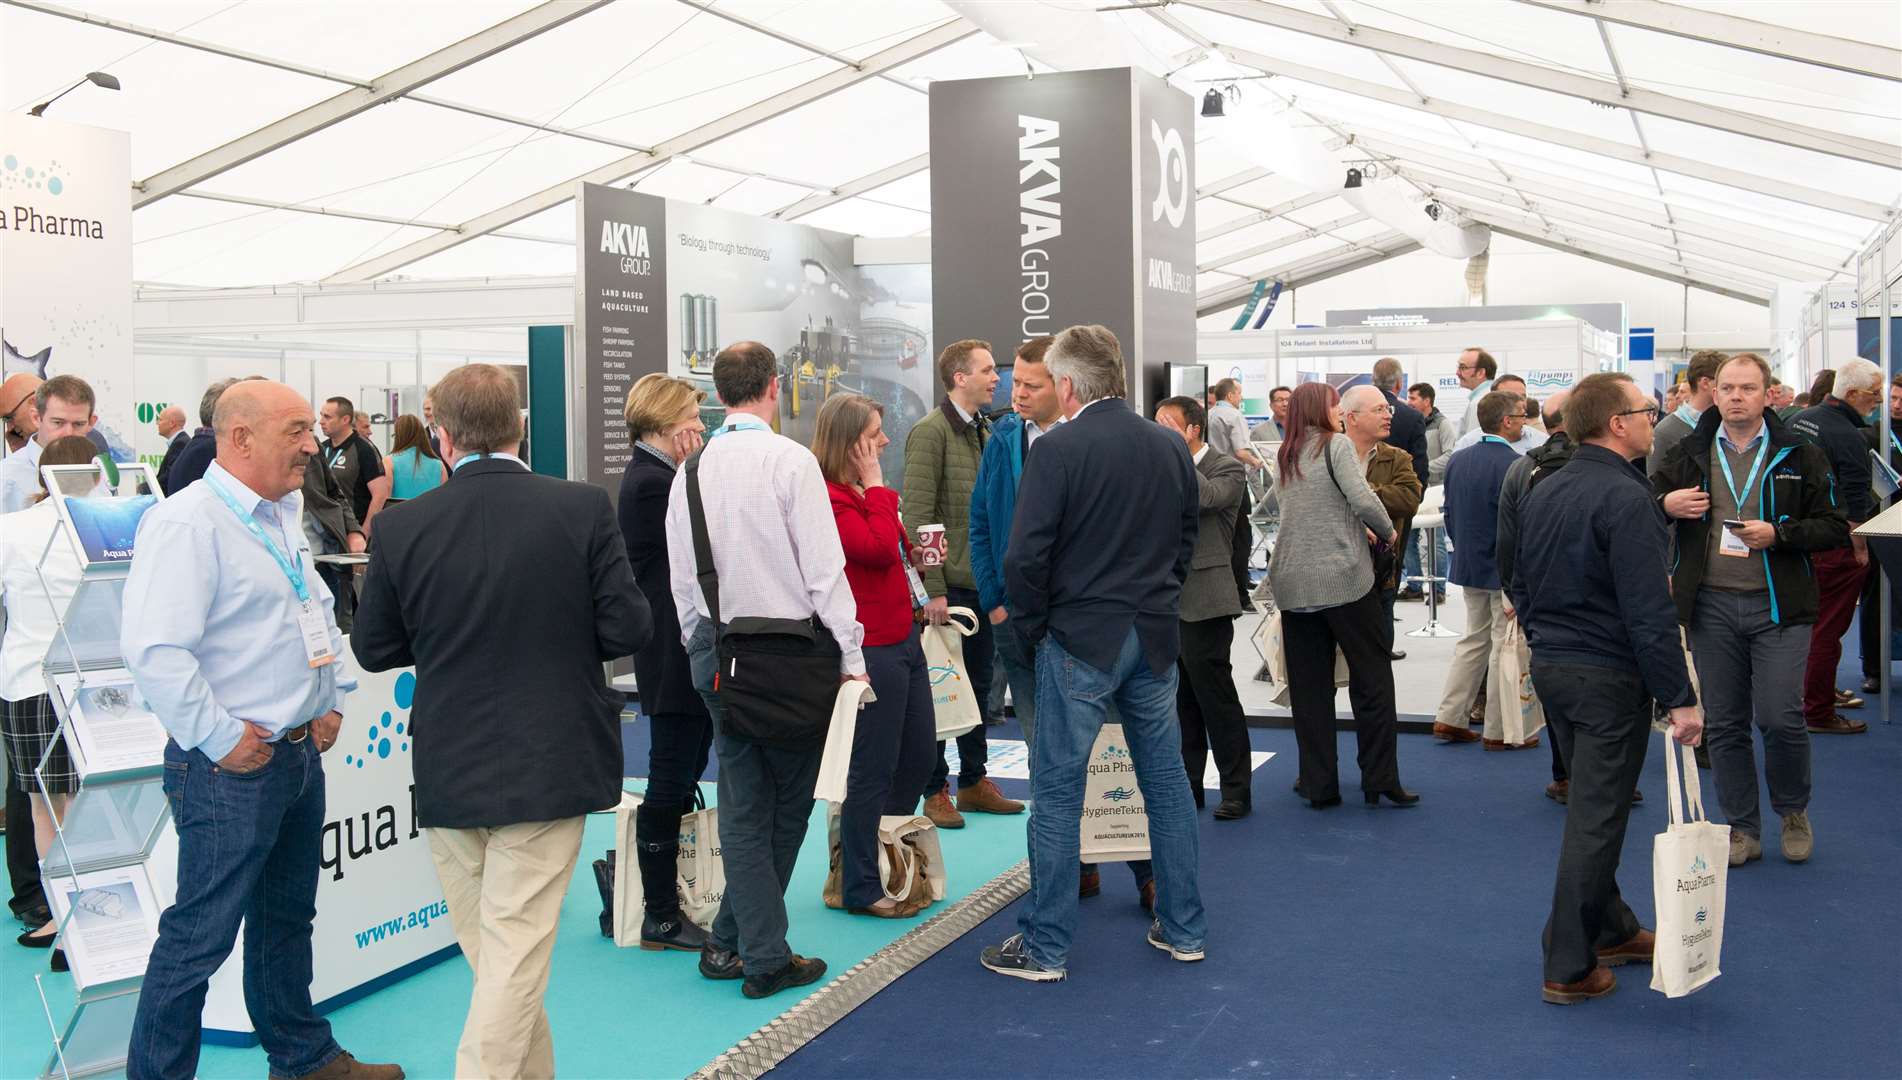 Aquaculture UK is the UK's biggest aquaculture sector conference and trade fair.